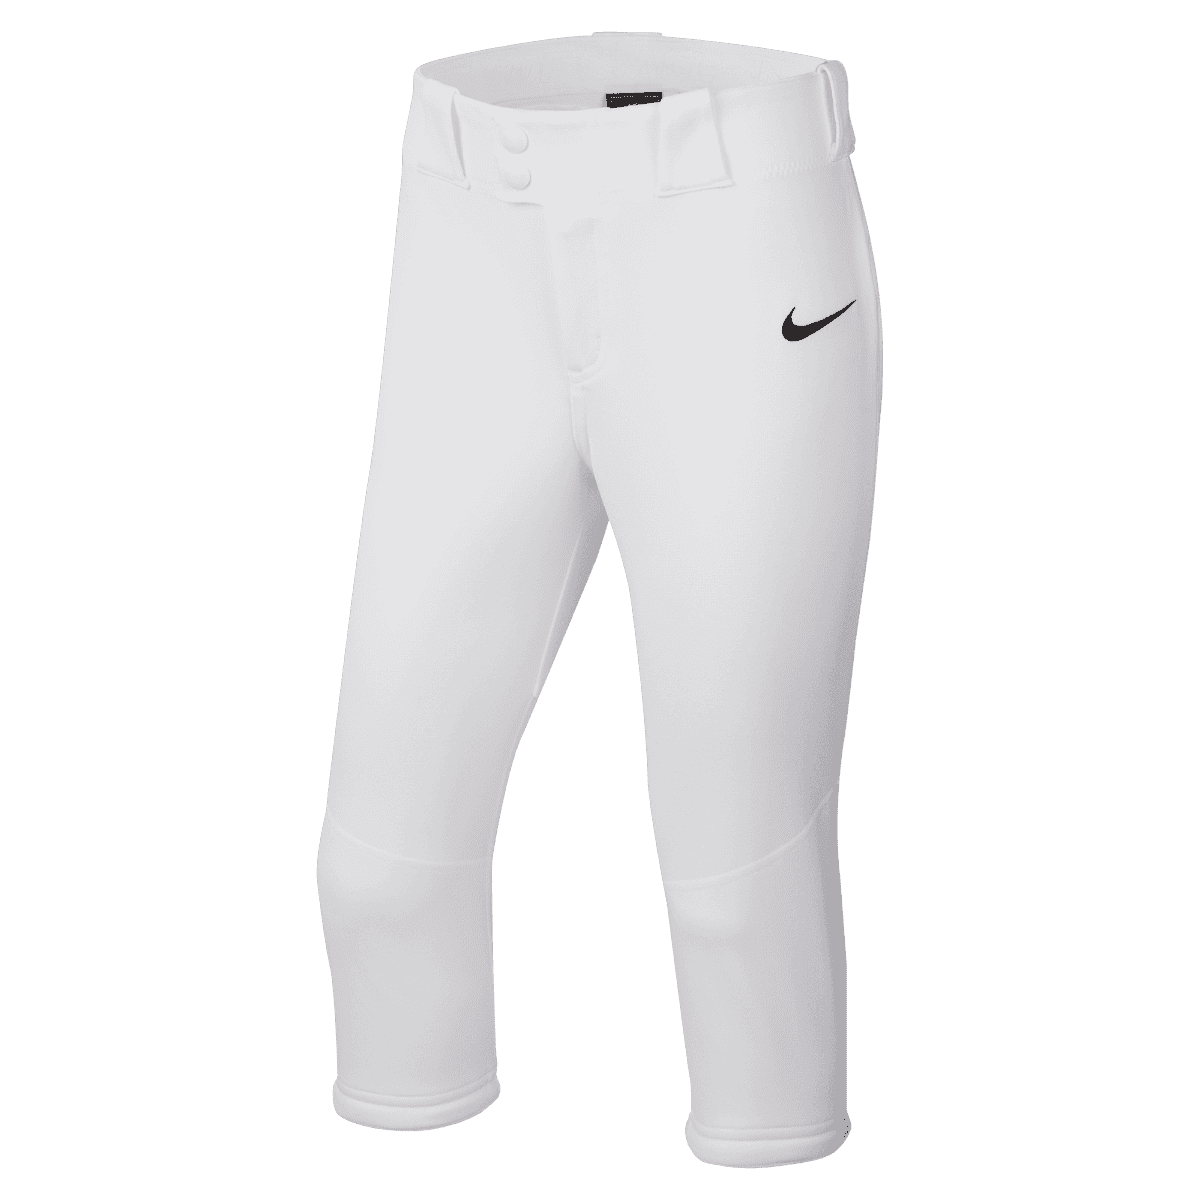 Black Softball Pants | Best Price Guarantee at DICK'S